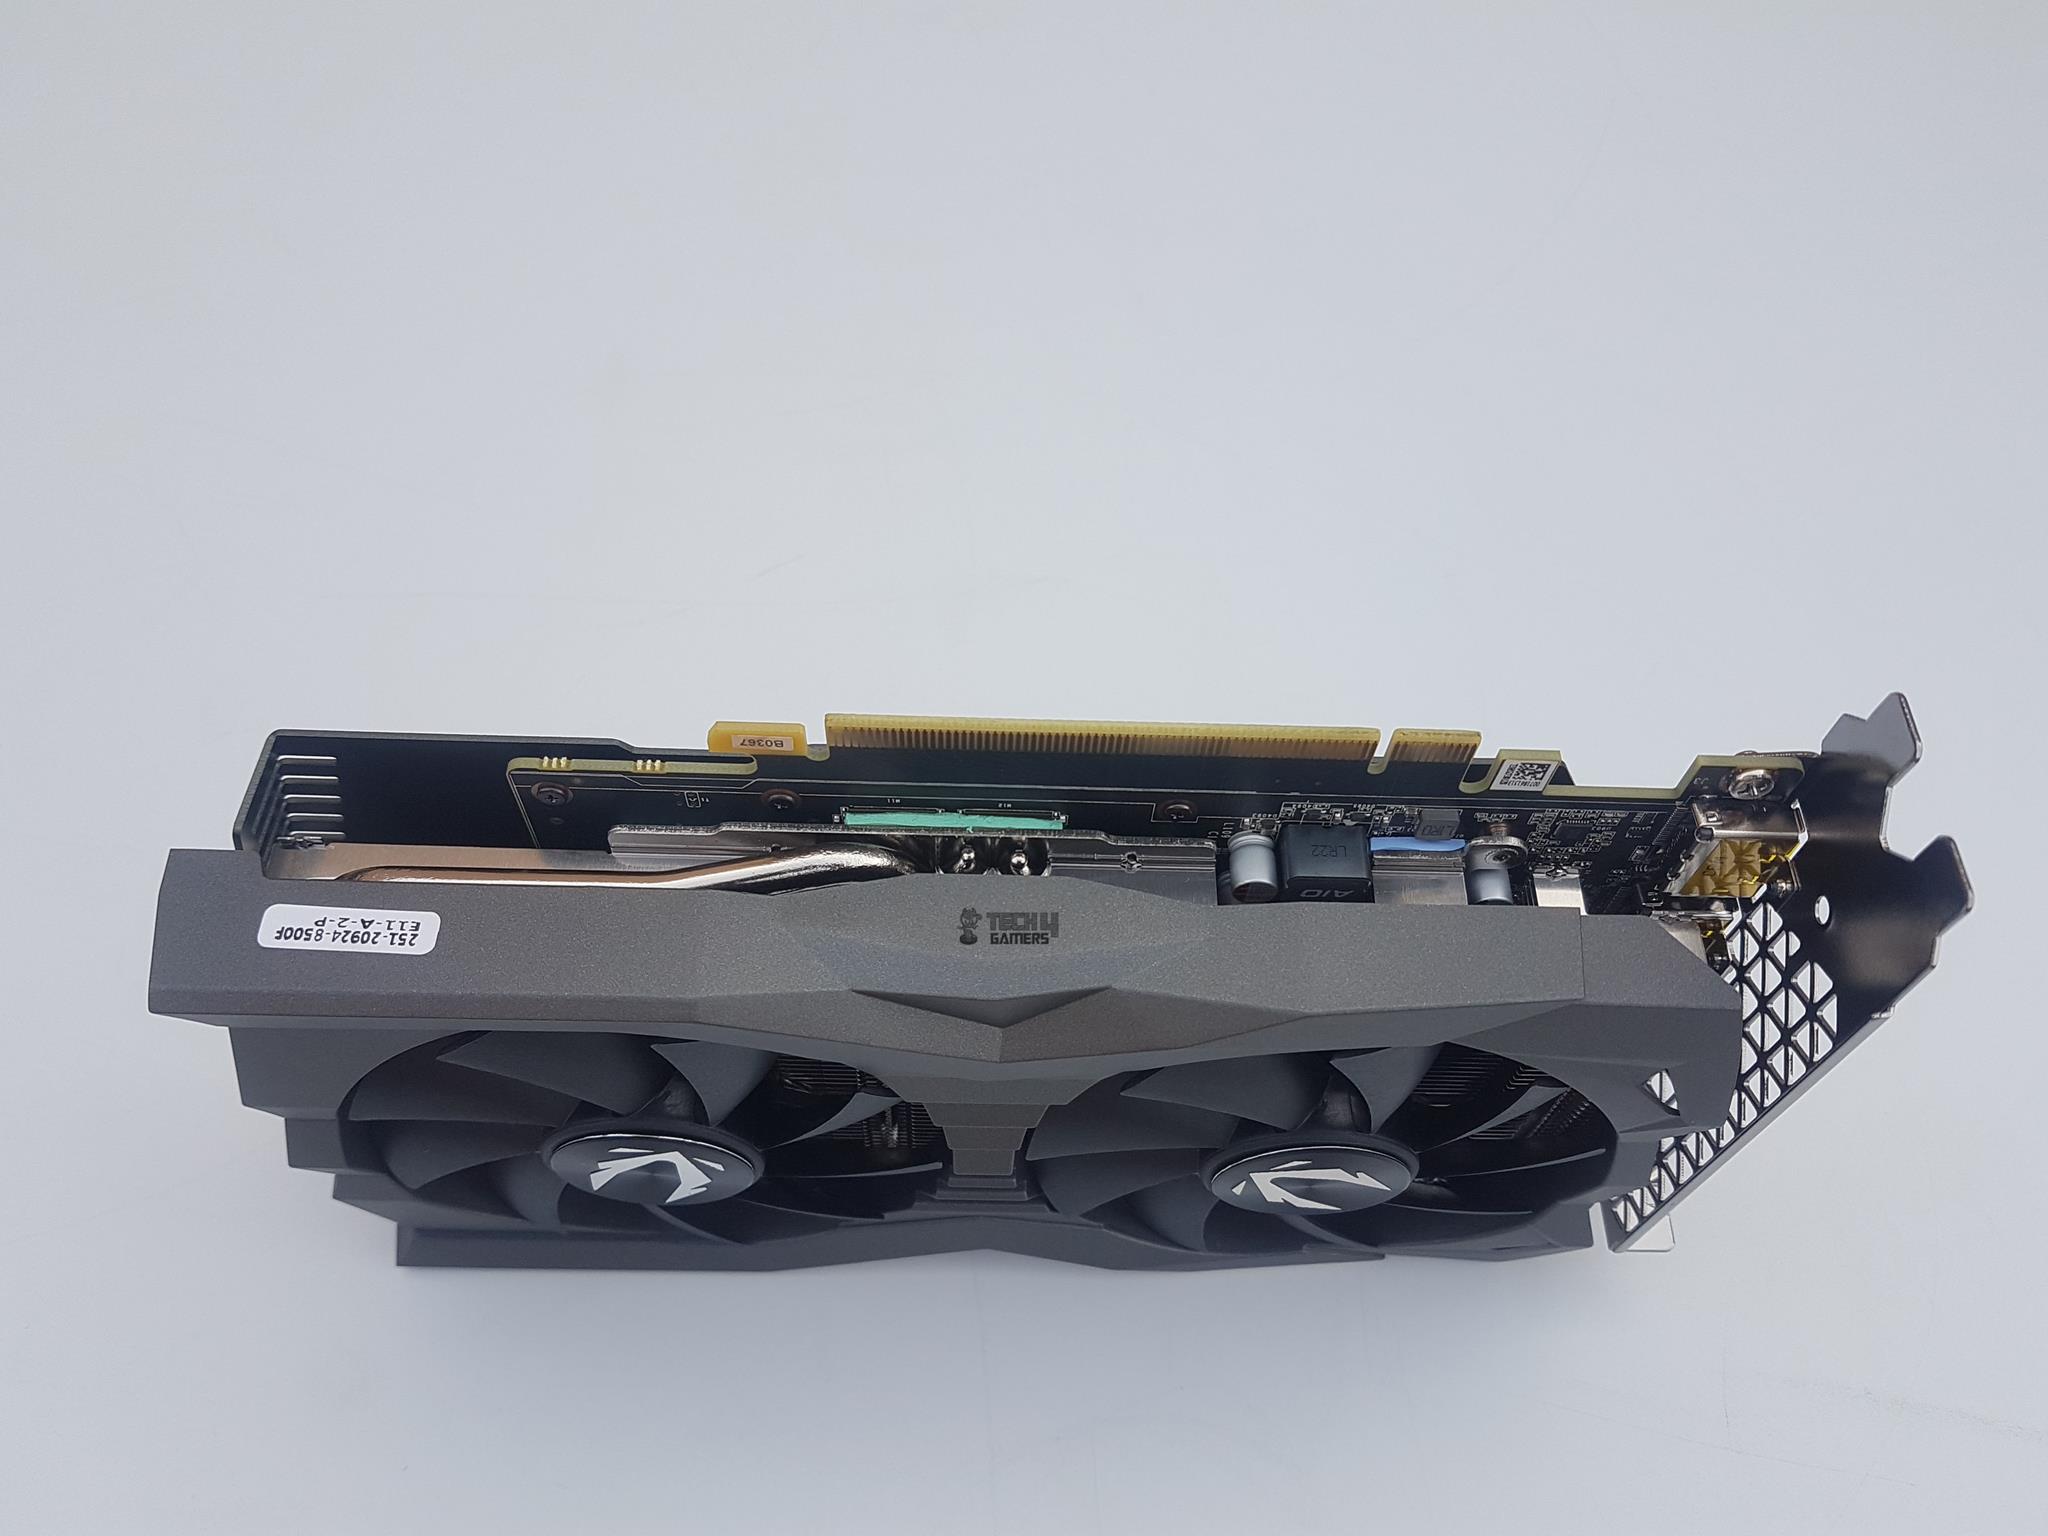 ZOTAC GeForce GTX 1660 Ti Amp Edition — The bottom side of the GPU